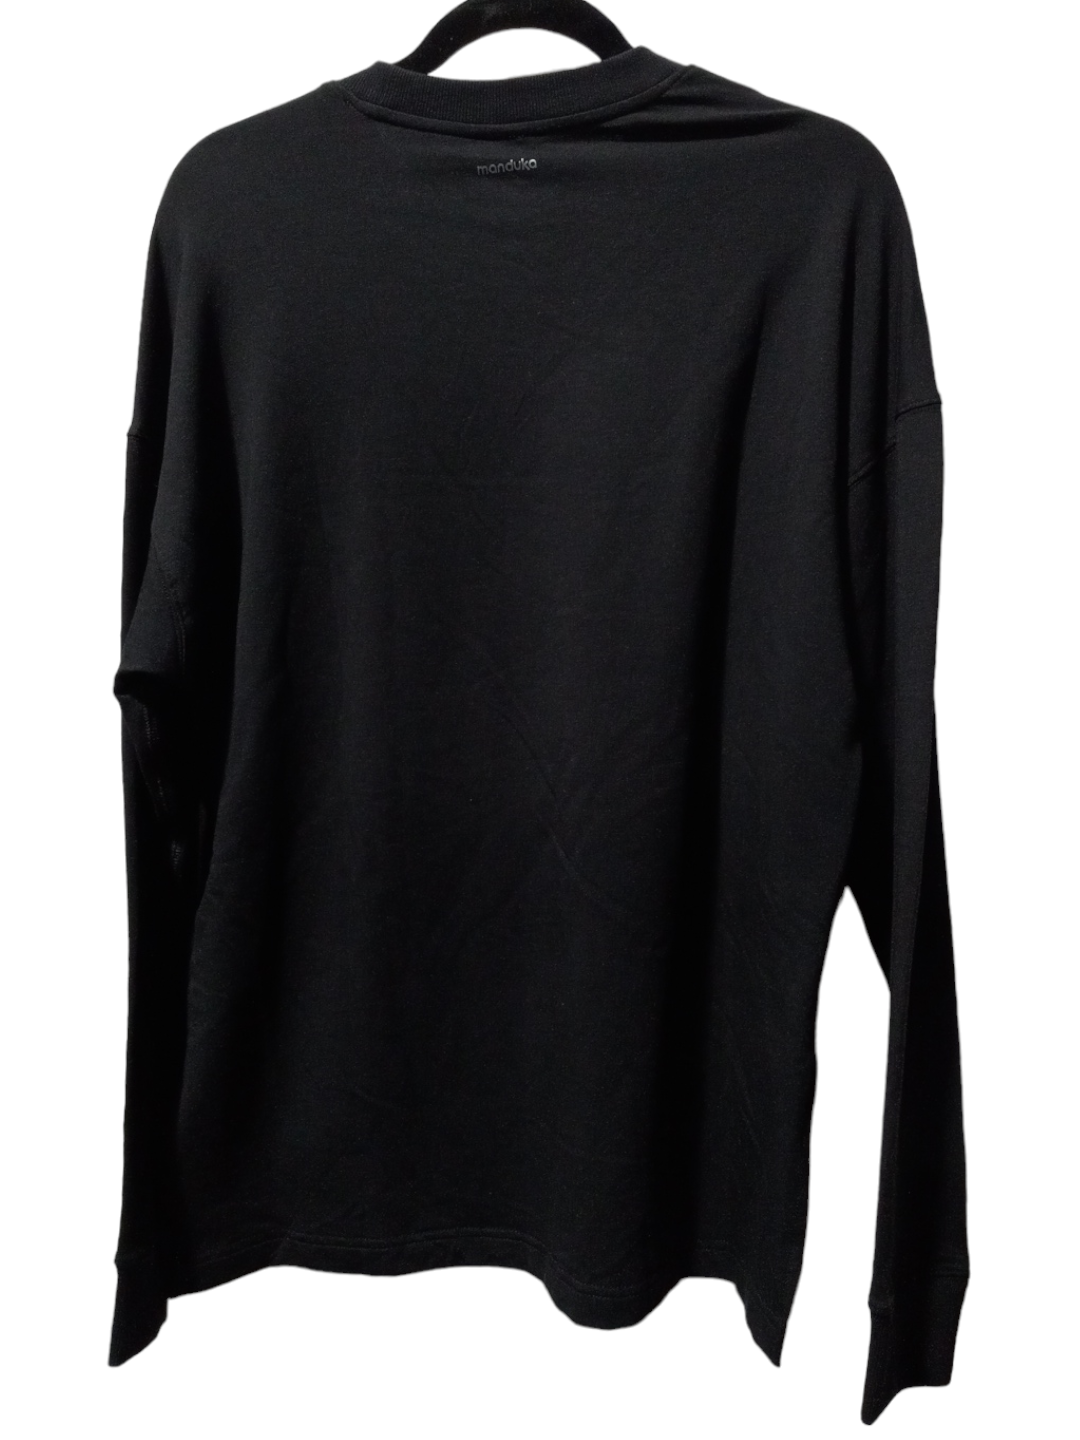 Black Athletic Top Long Sleeve Crewneck Clothes Mentor, Size L